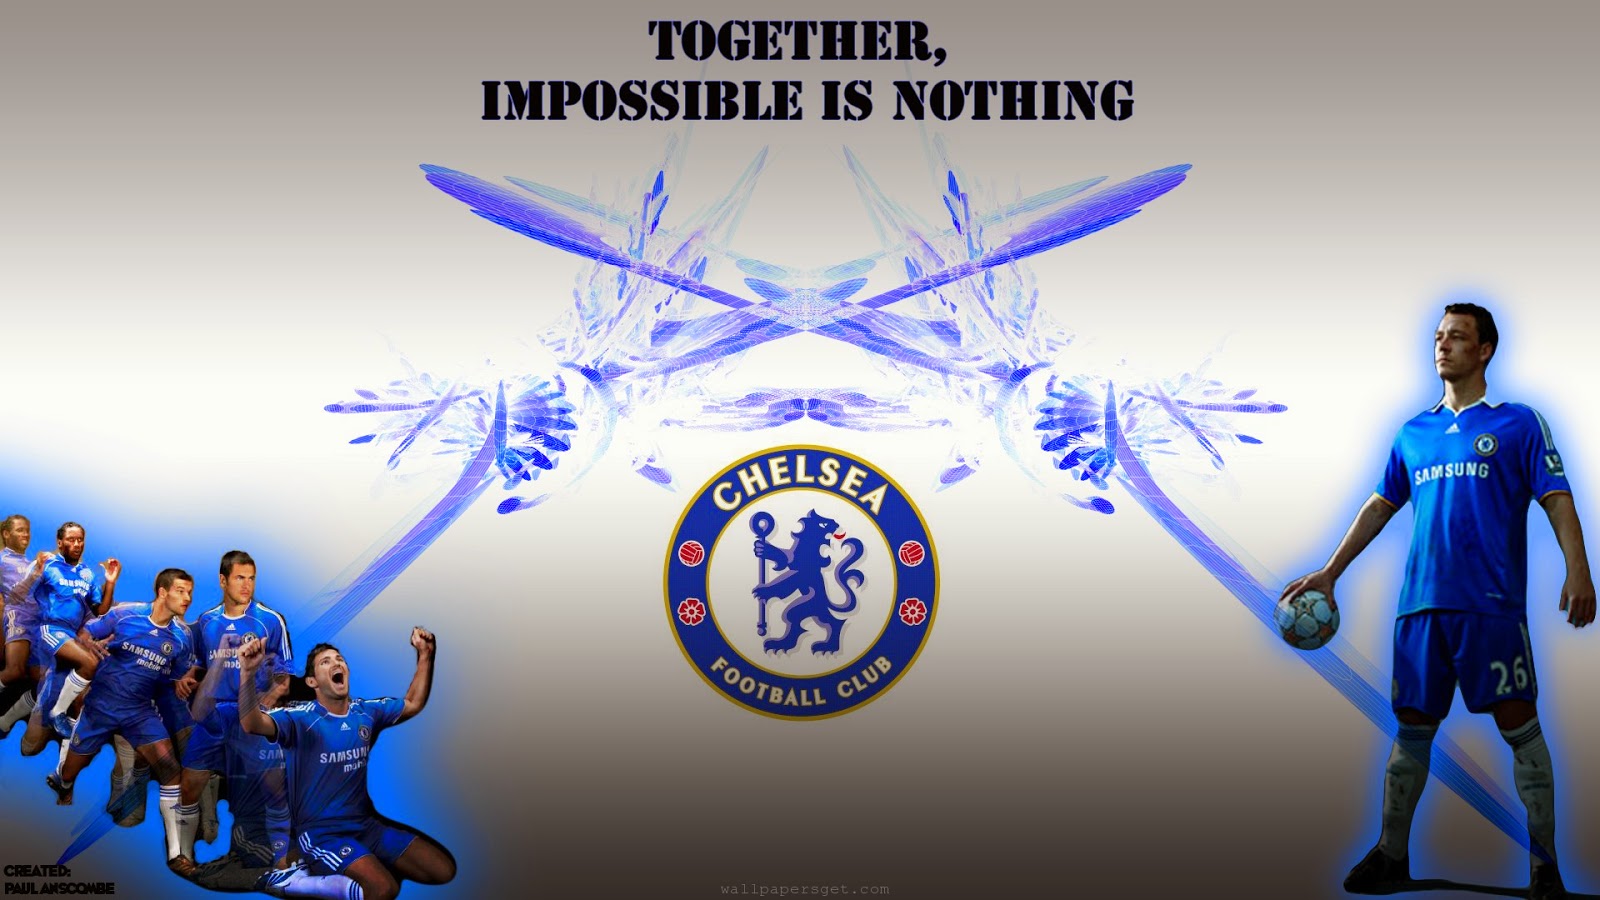 Chelsea Football Club Wallpaper Football Wallpaper HD